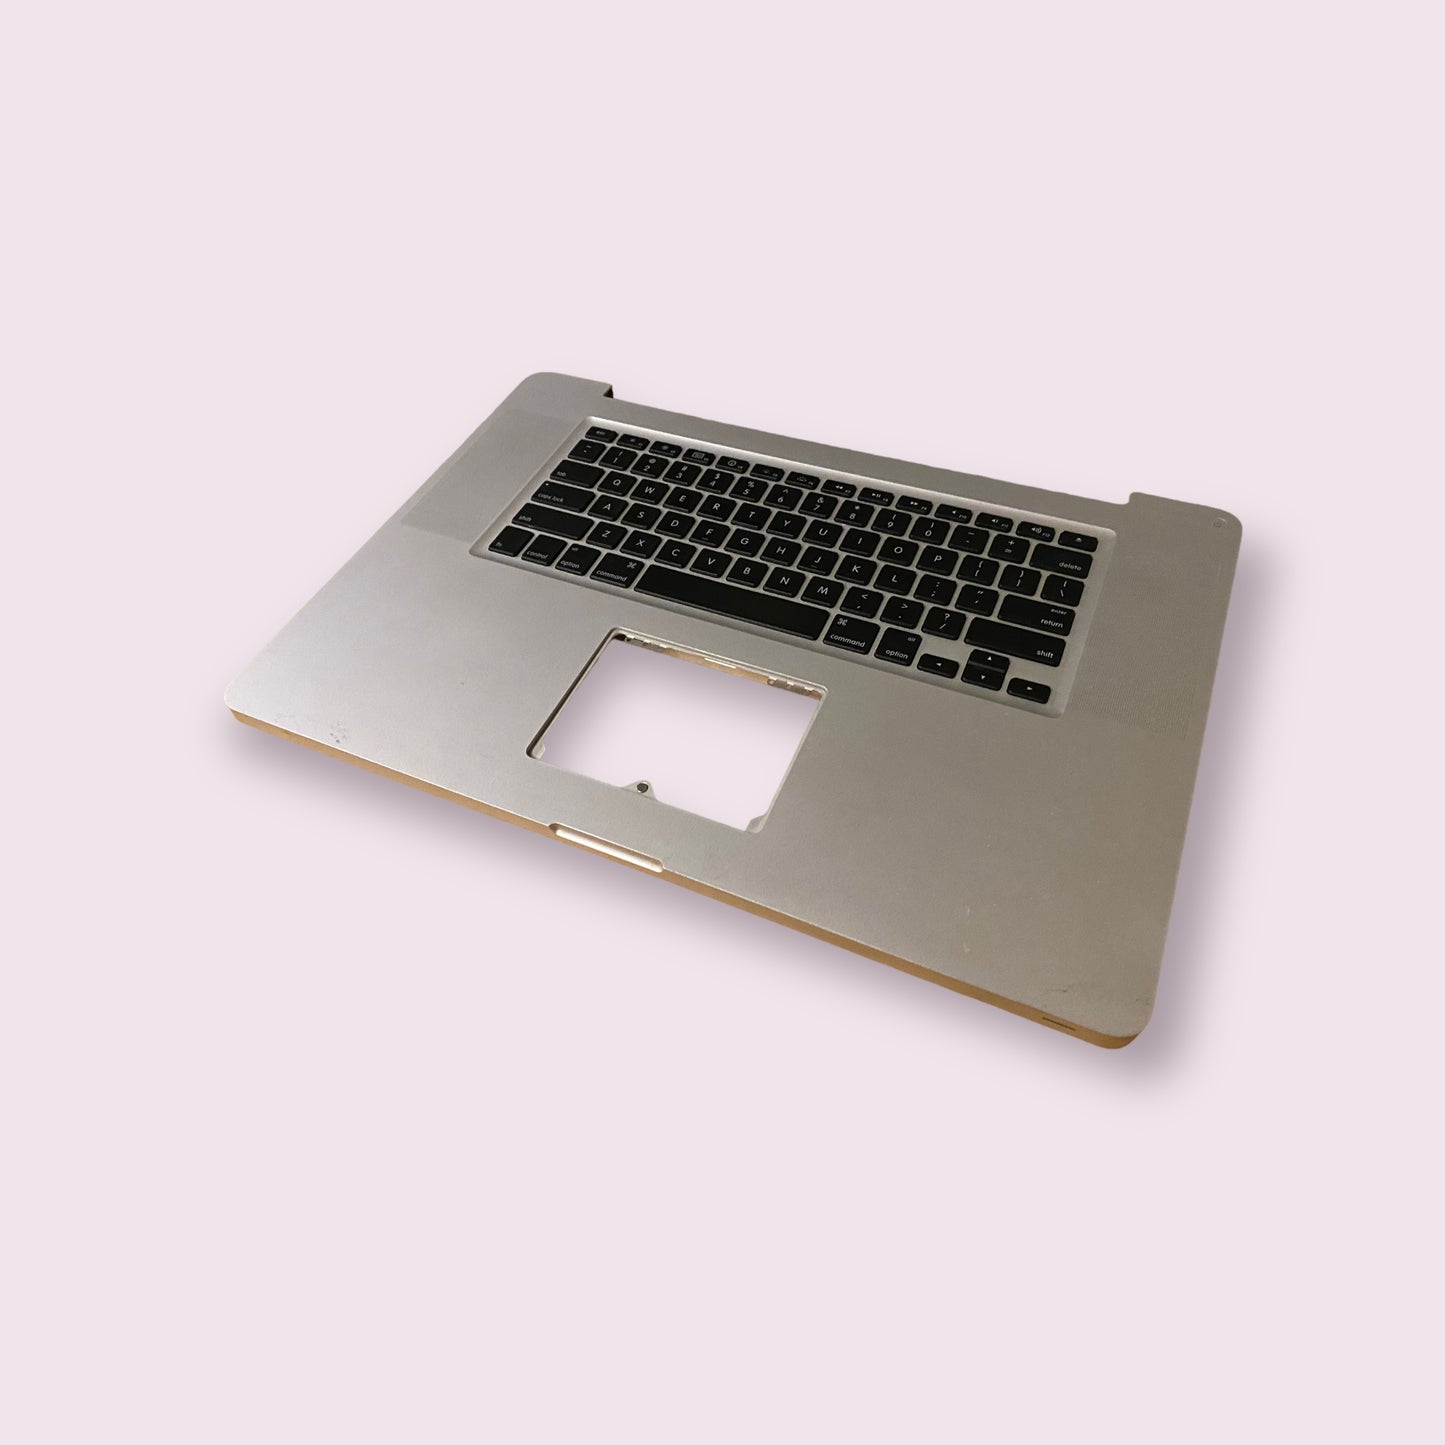 Macbook Pro 17" 2009 A1297 Palmrest Keyboard Assembly Palm rest - Silver - Genuine Pull Part